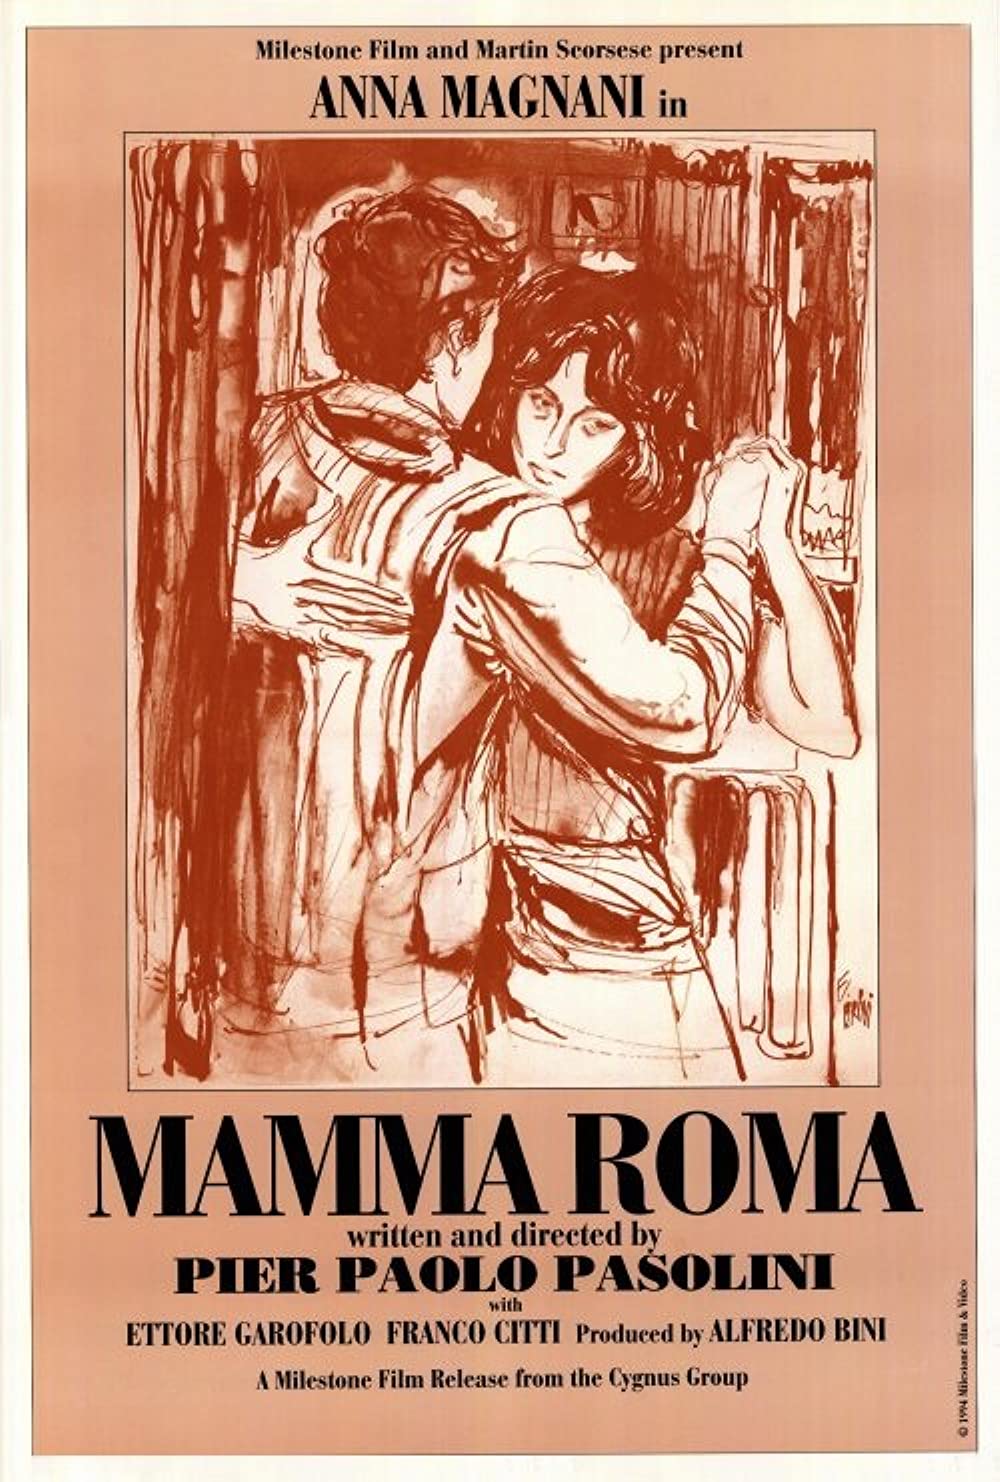 Filmbeschreibung zu Mamma Roma